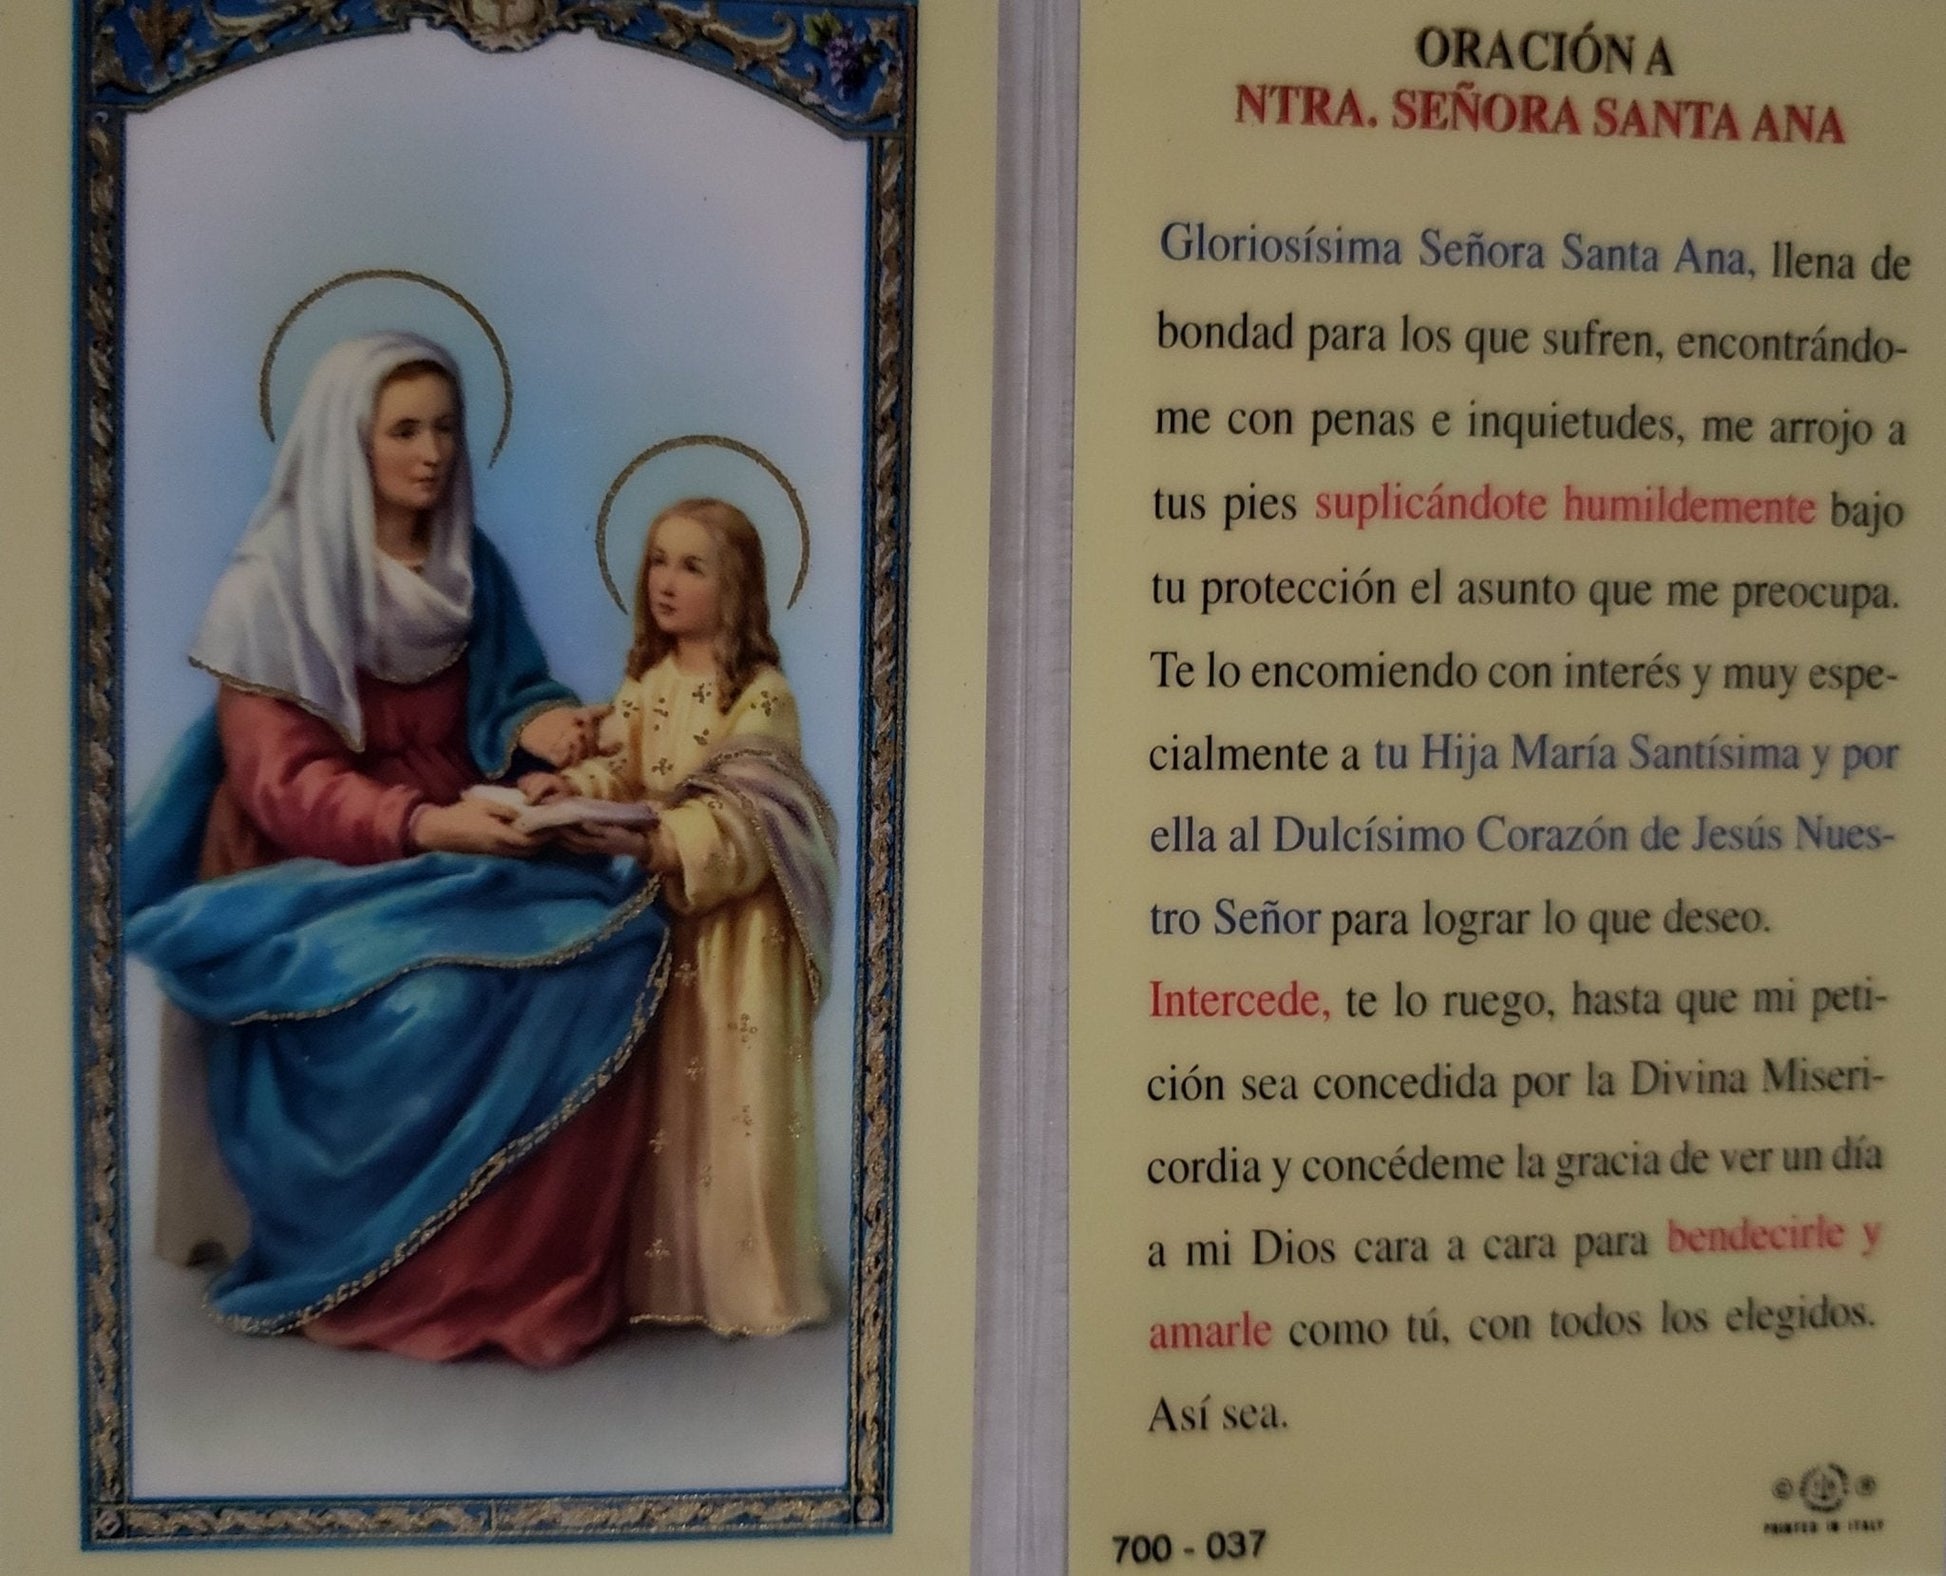 Prayer Card Oracion A Nuestra Senora Santa Ana SPANISH Laminated 700-037 - Ysleta Mission Gift Shop- VOTED El Paso's Best Gift Shop